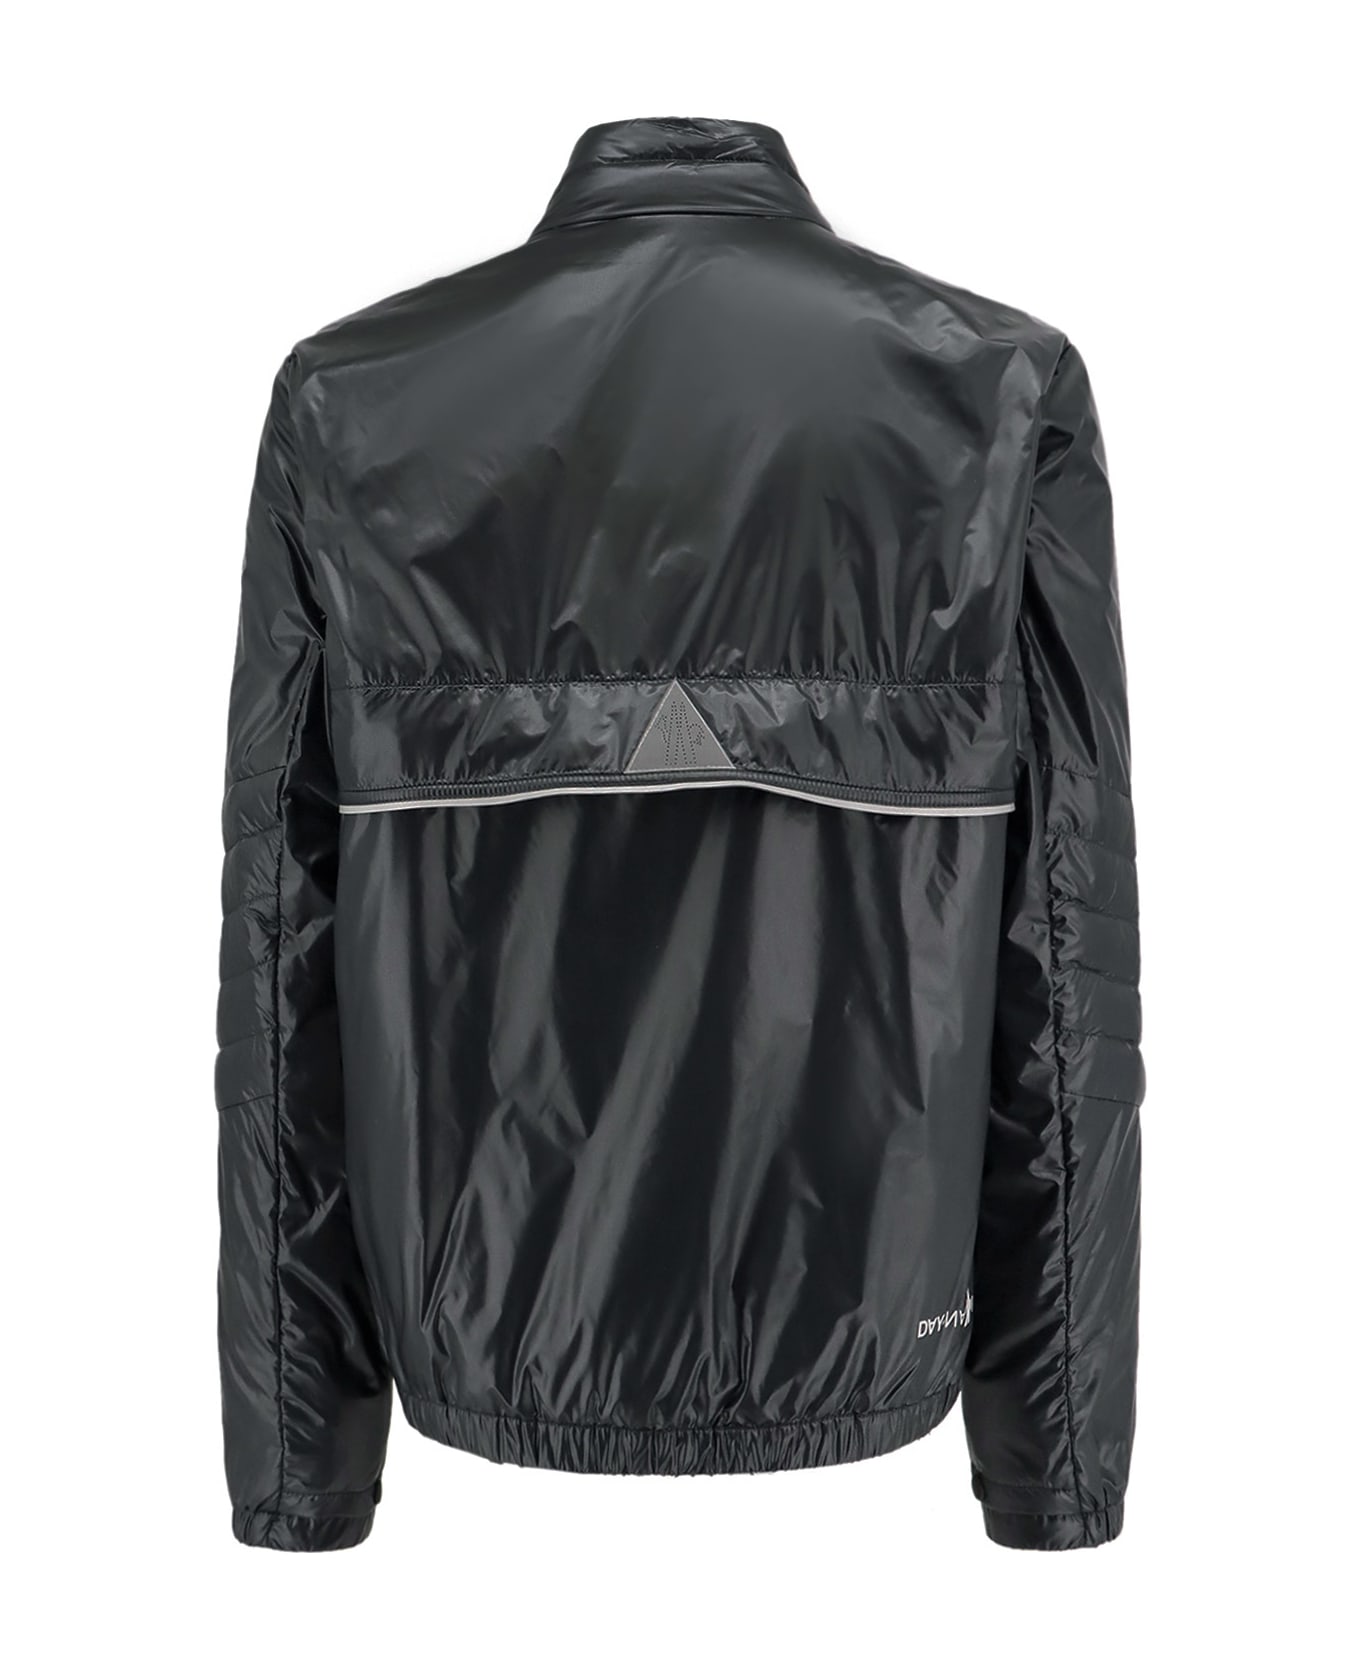 Moncler Grenoble Althaus Jacket - Black ダウンジャケット